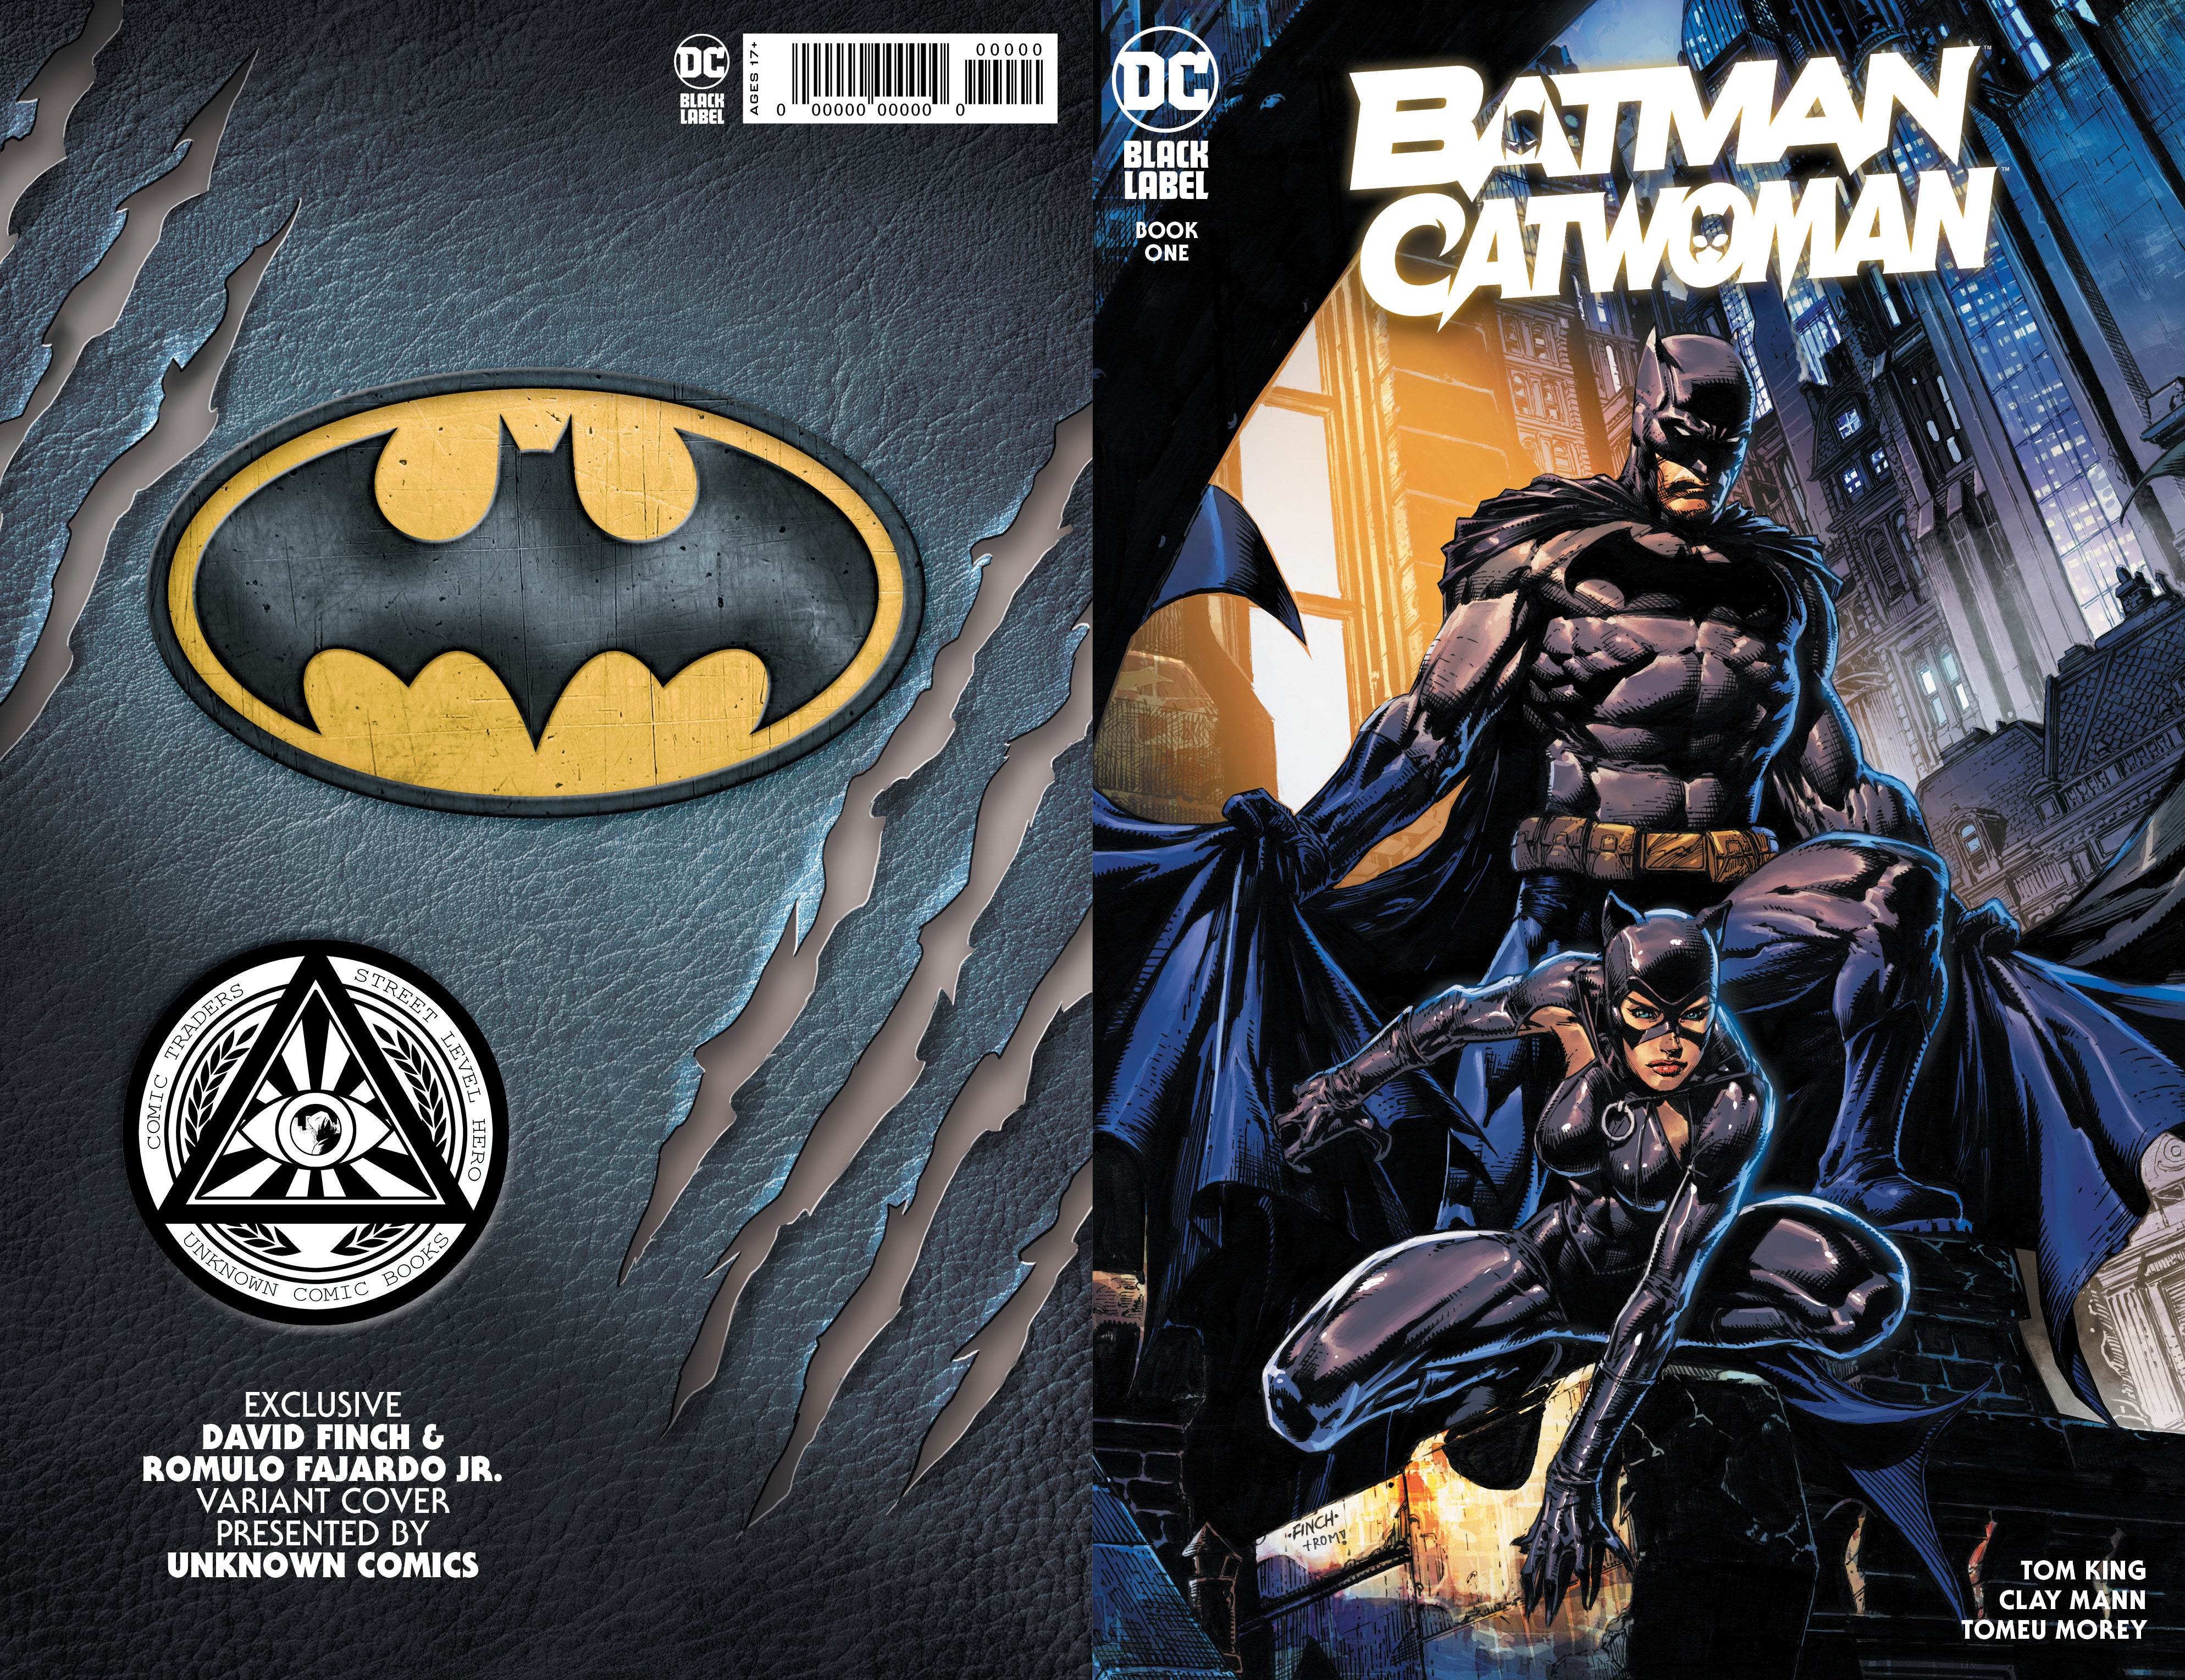 BATMAN CATWOMAN #1 (OF 12) UNKNOWN COMICS DAVID FINCH EXCLUSIVE VAR (12/02/2020)